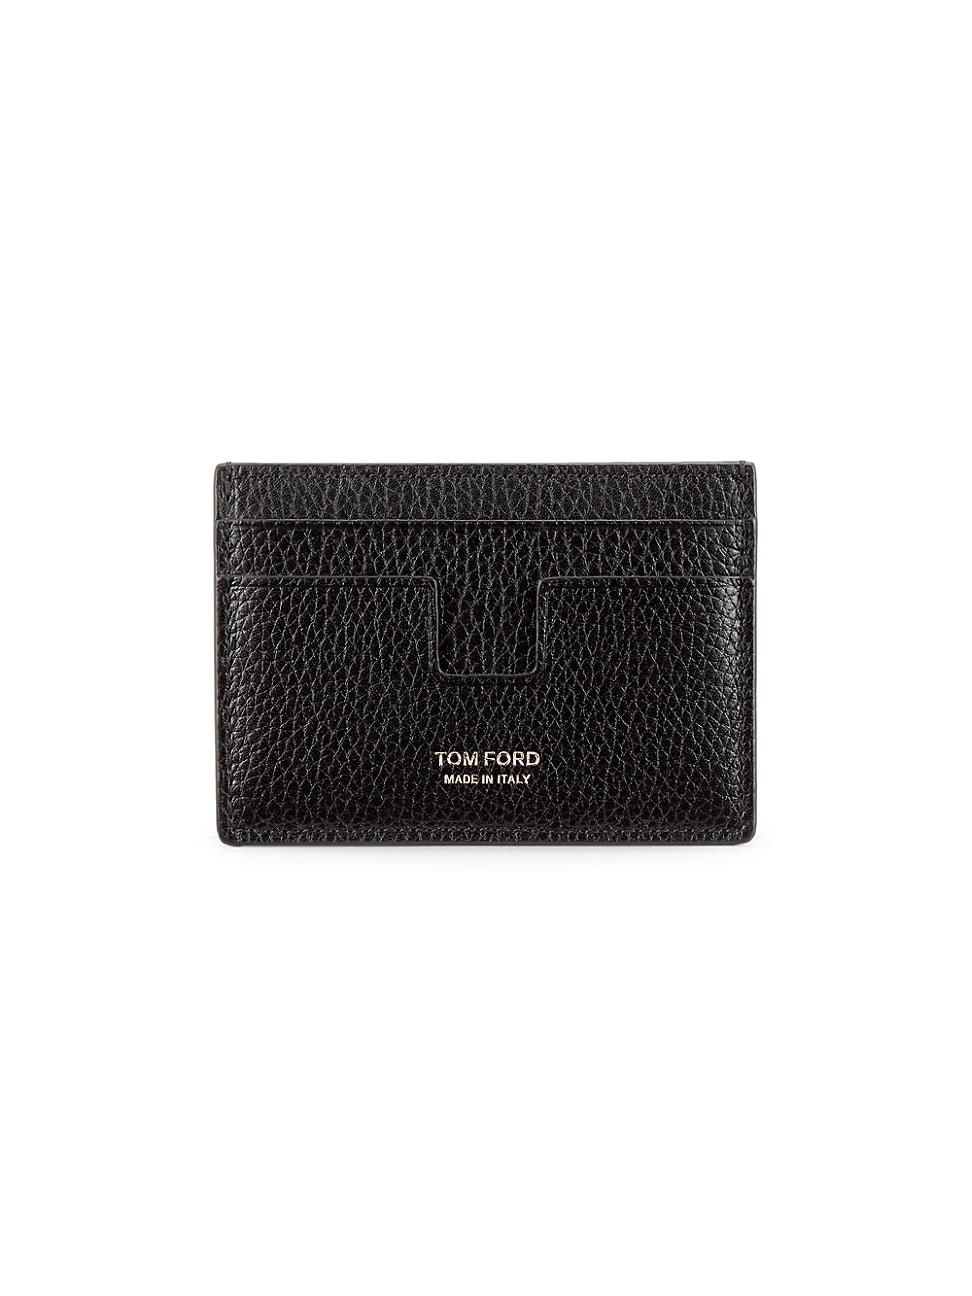 Louis Vuitton Card Holder Money Clip Saks Fifth Avenue VERY